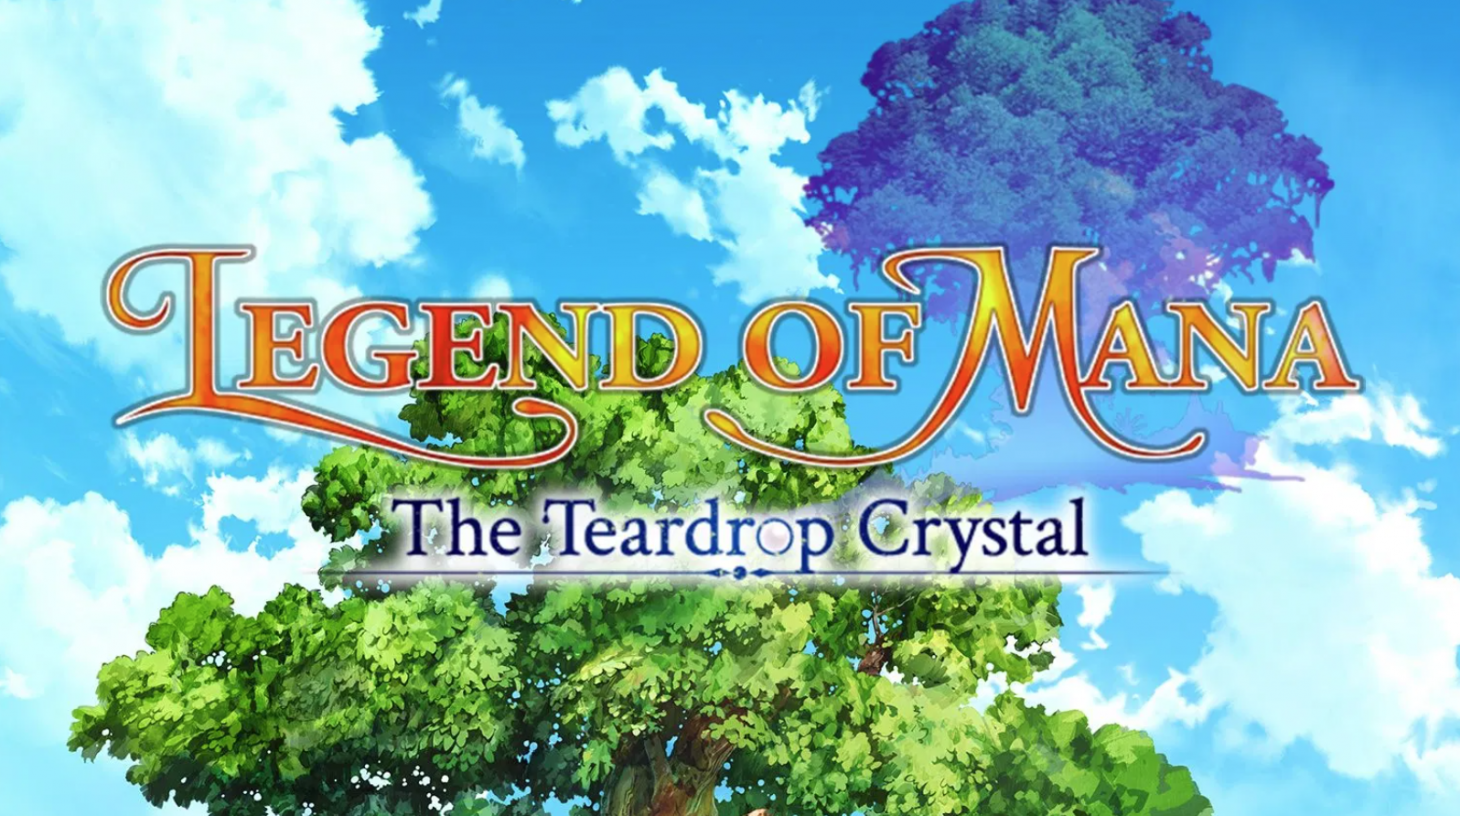 Legend of Mana The Teardrop Crystal opening movie  Gematsu